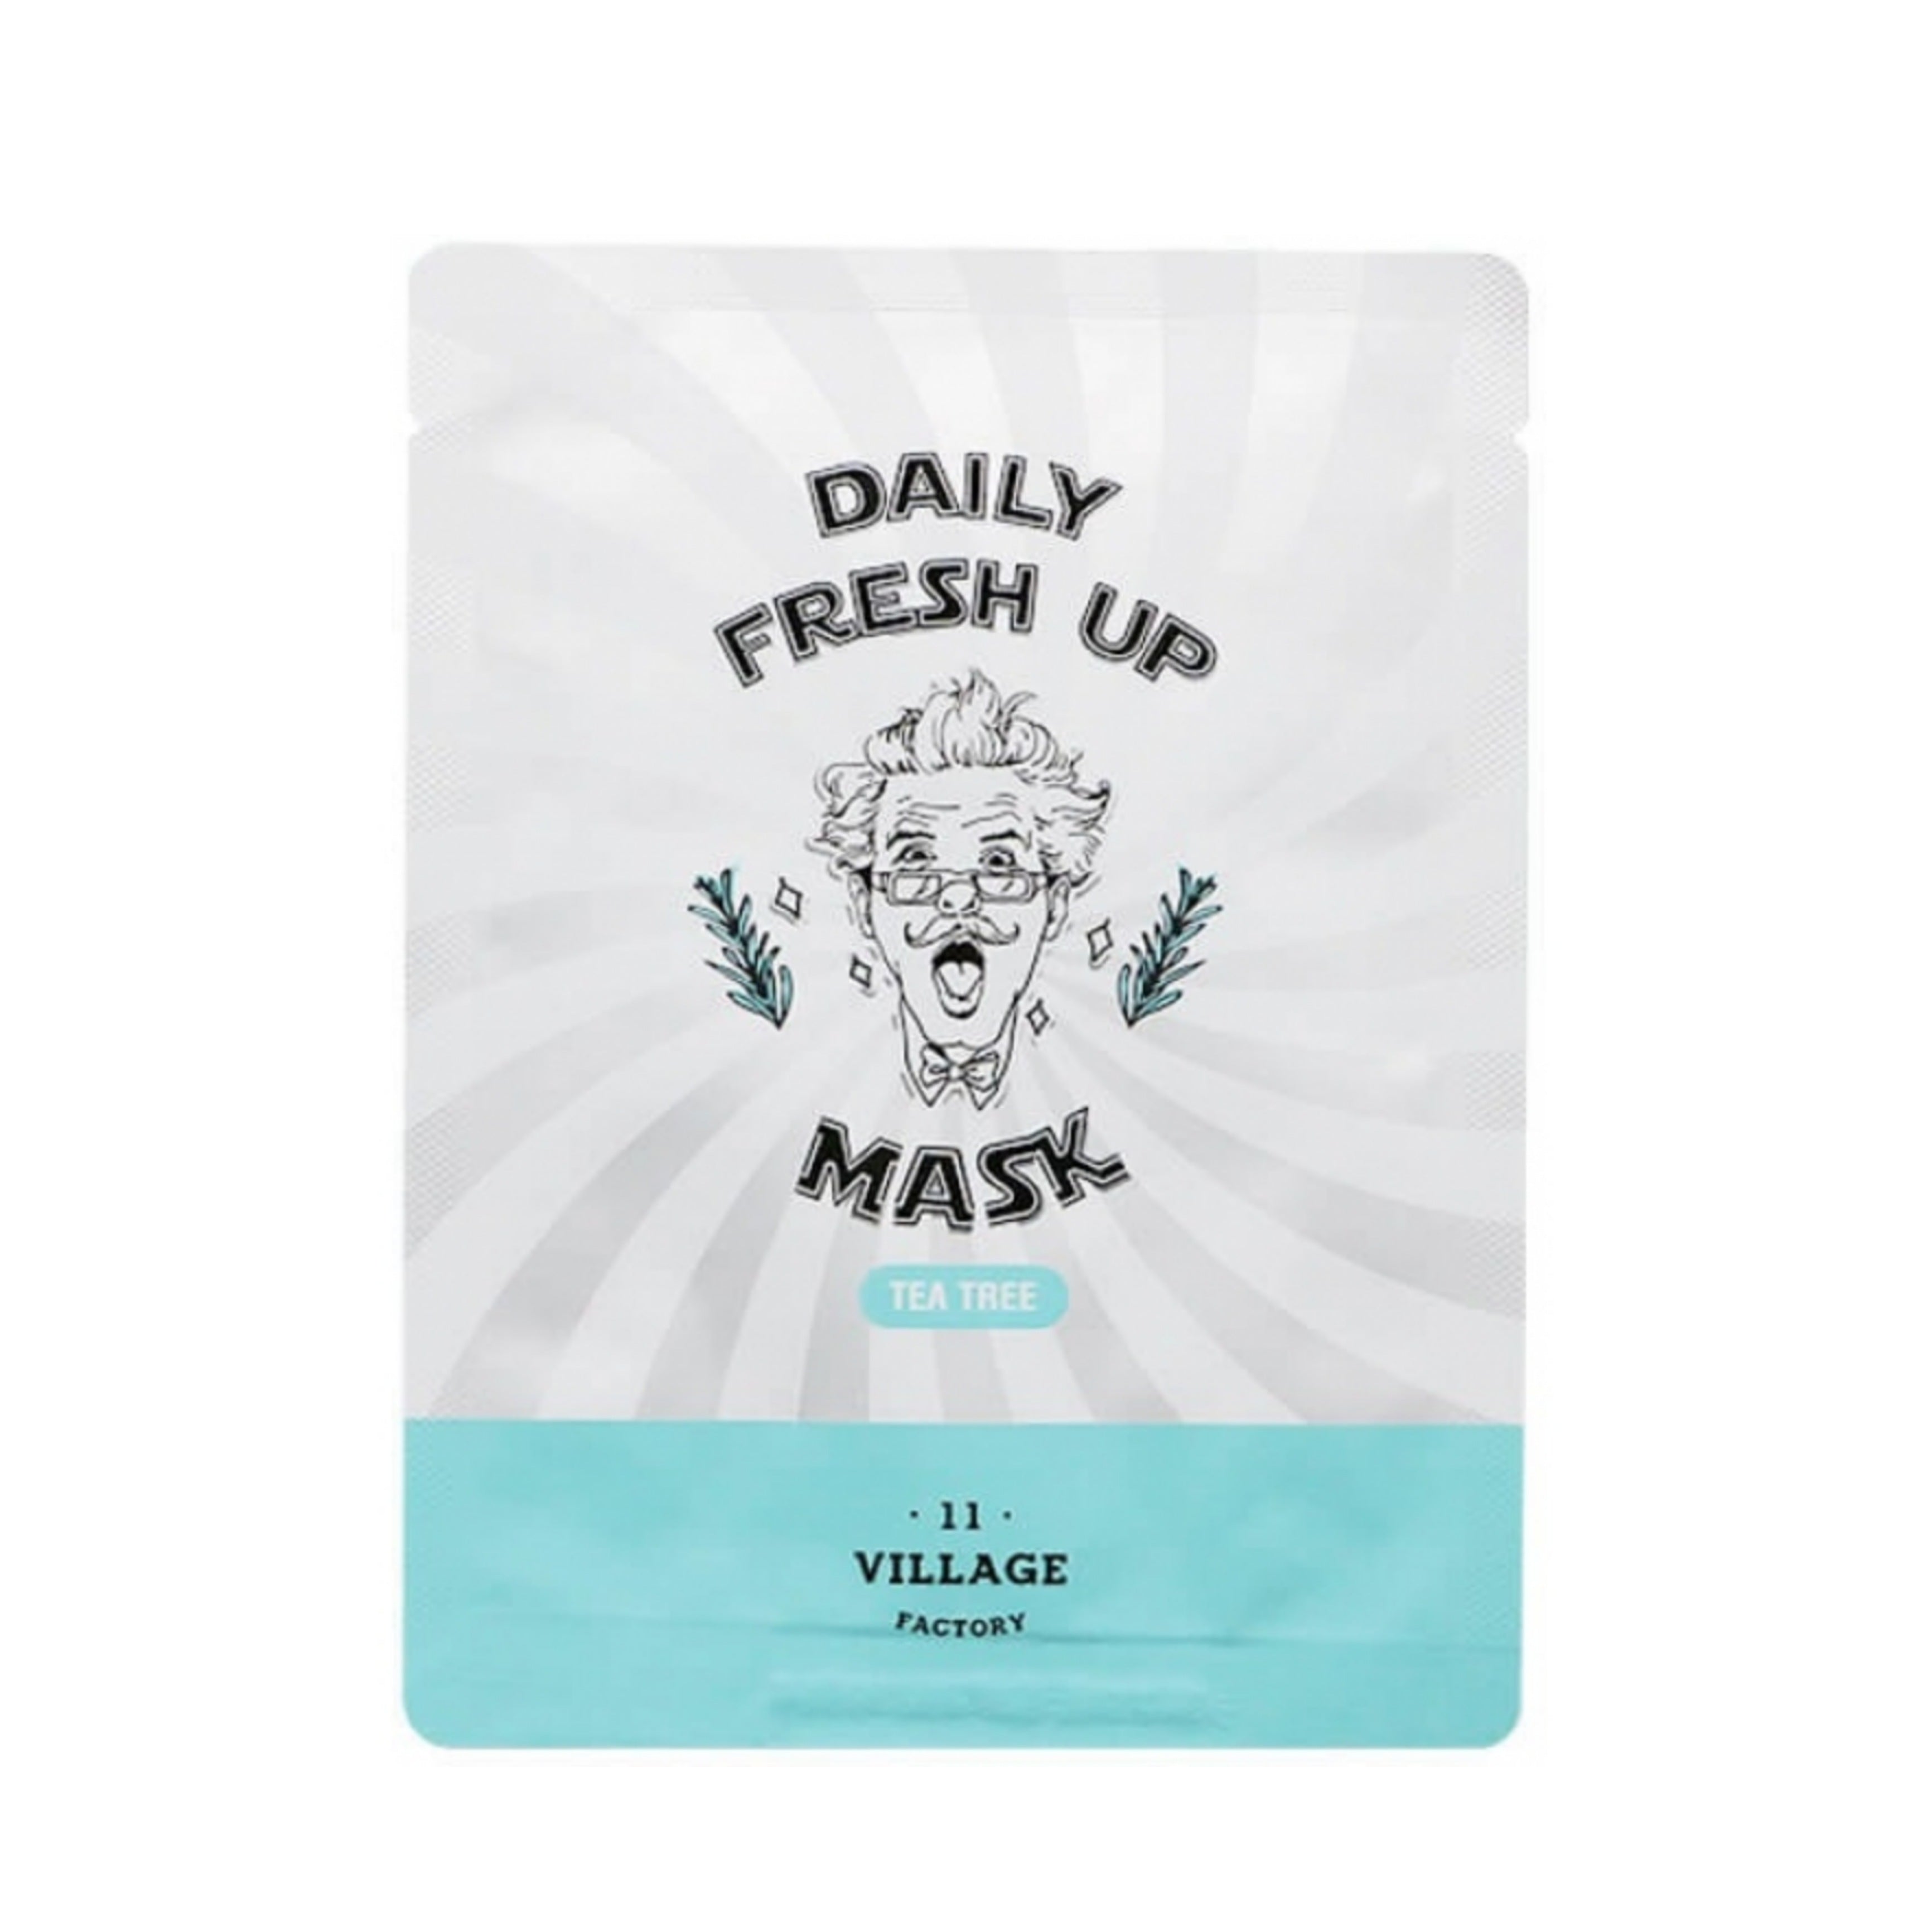 VILLAGE 11 FACTORY Daily Fresh Up Mask Sheet Mask الماسكات الورقية للوجه